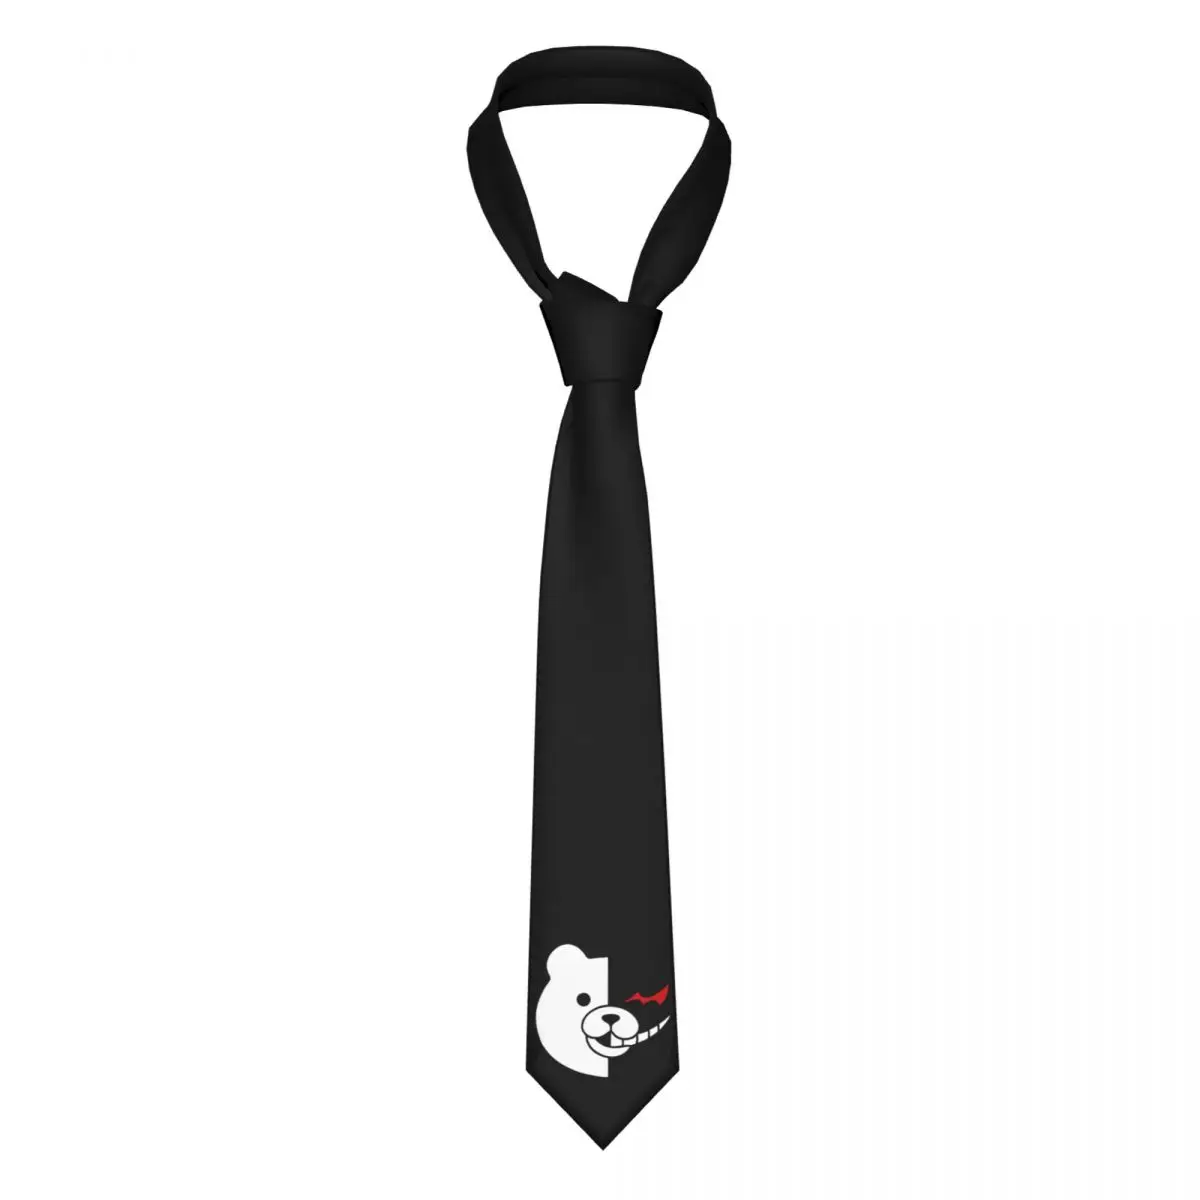 

Danganronpa Monokuma Anime Neckties Unisex Casual Polyester 8 cm Classic Neck Ties for Men Suits Accessories Gravatas Office